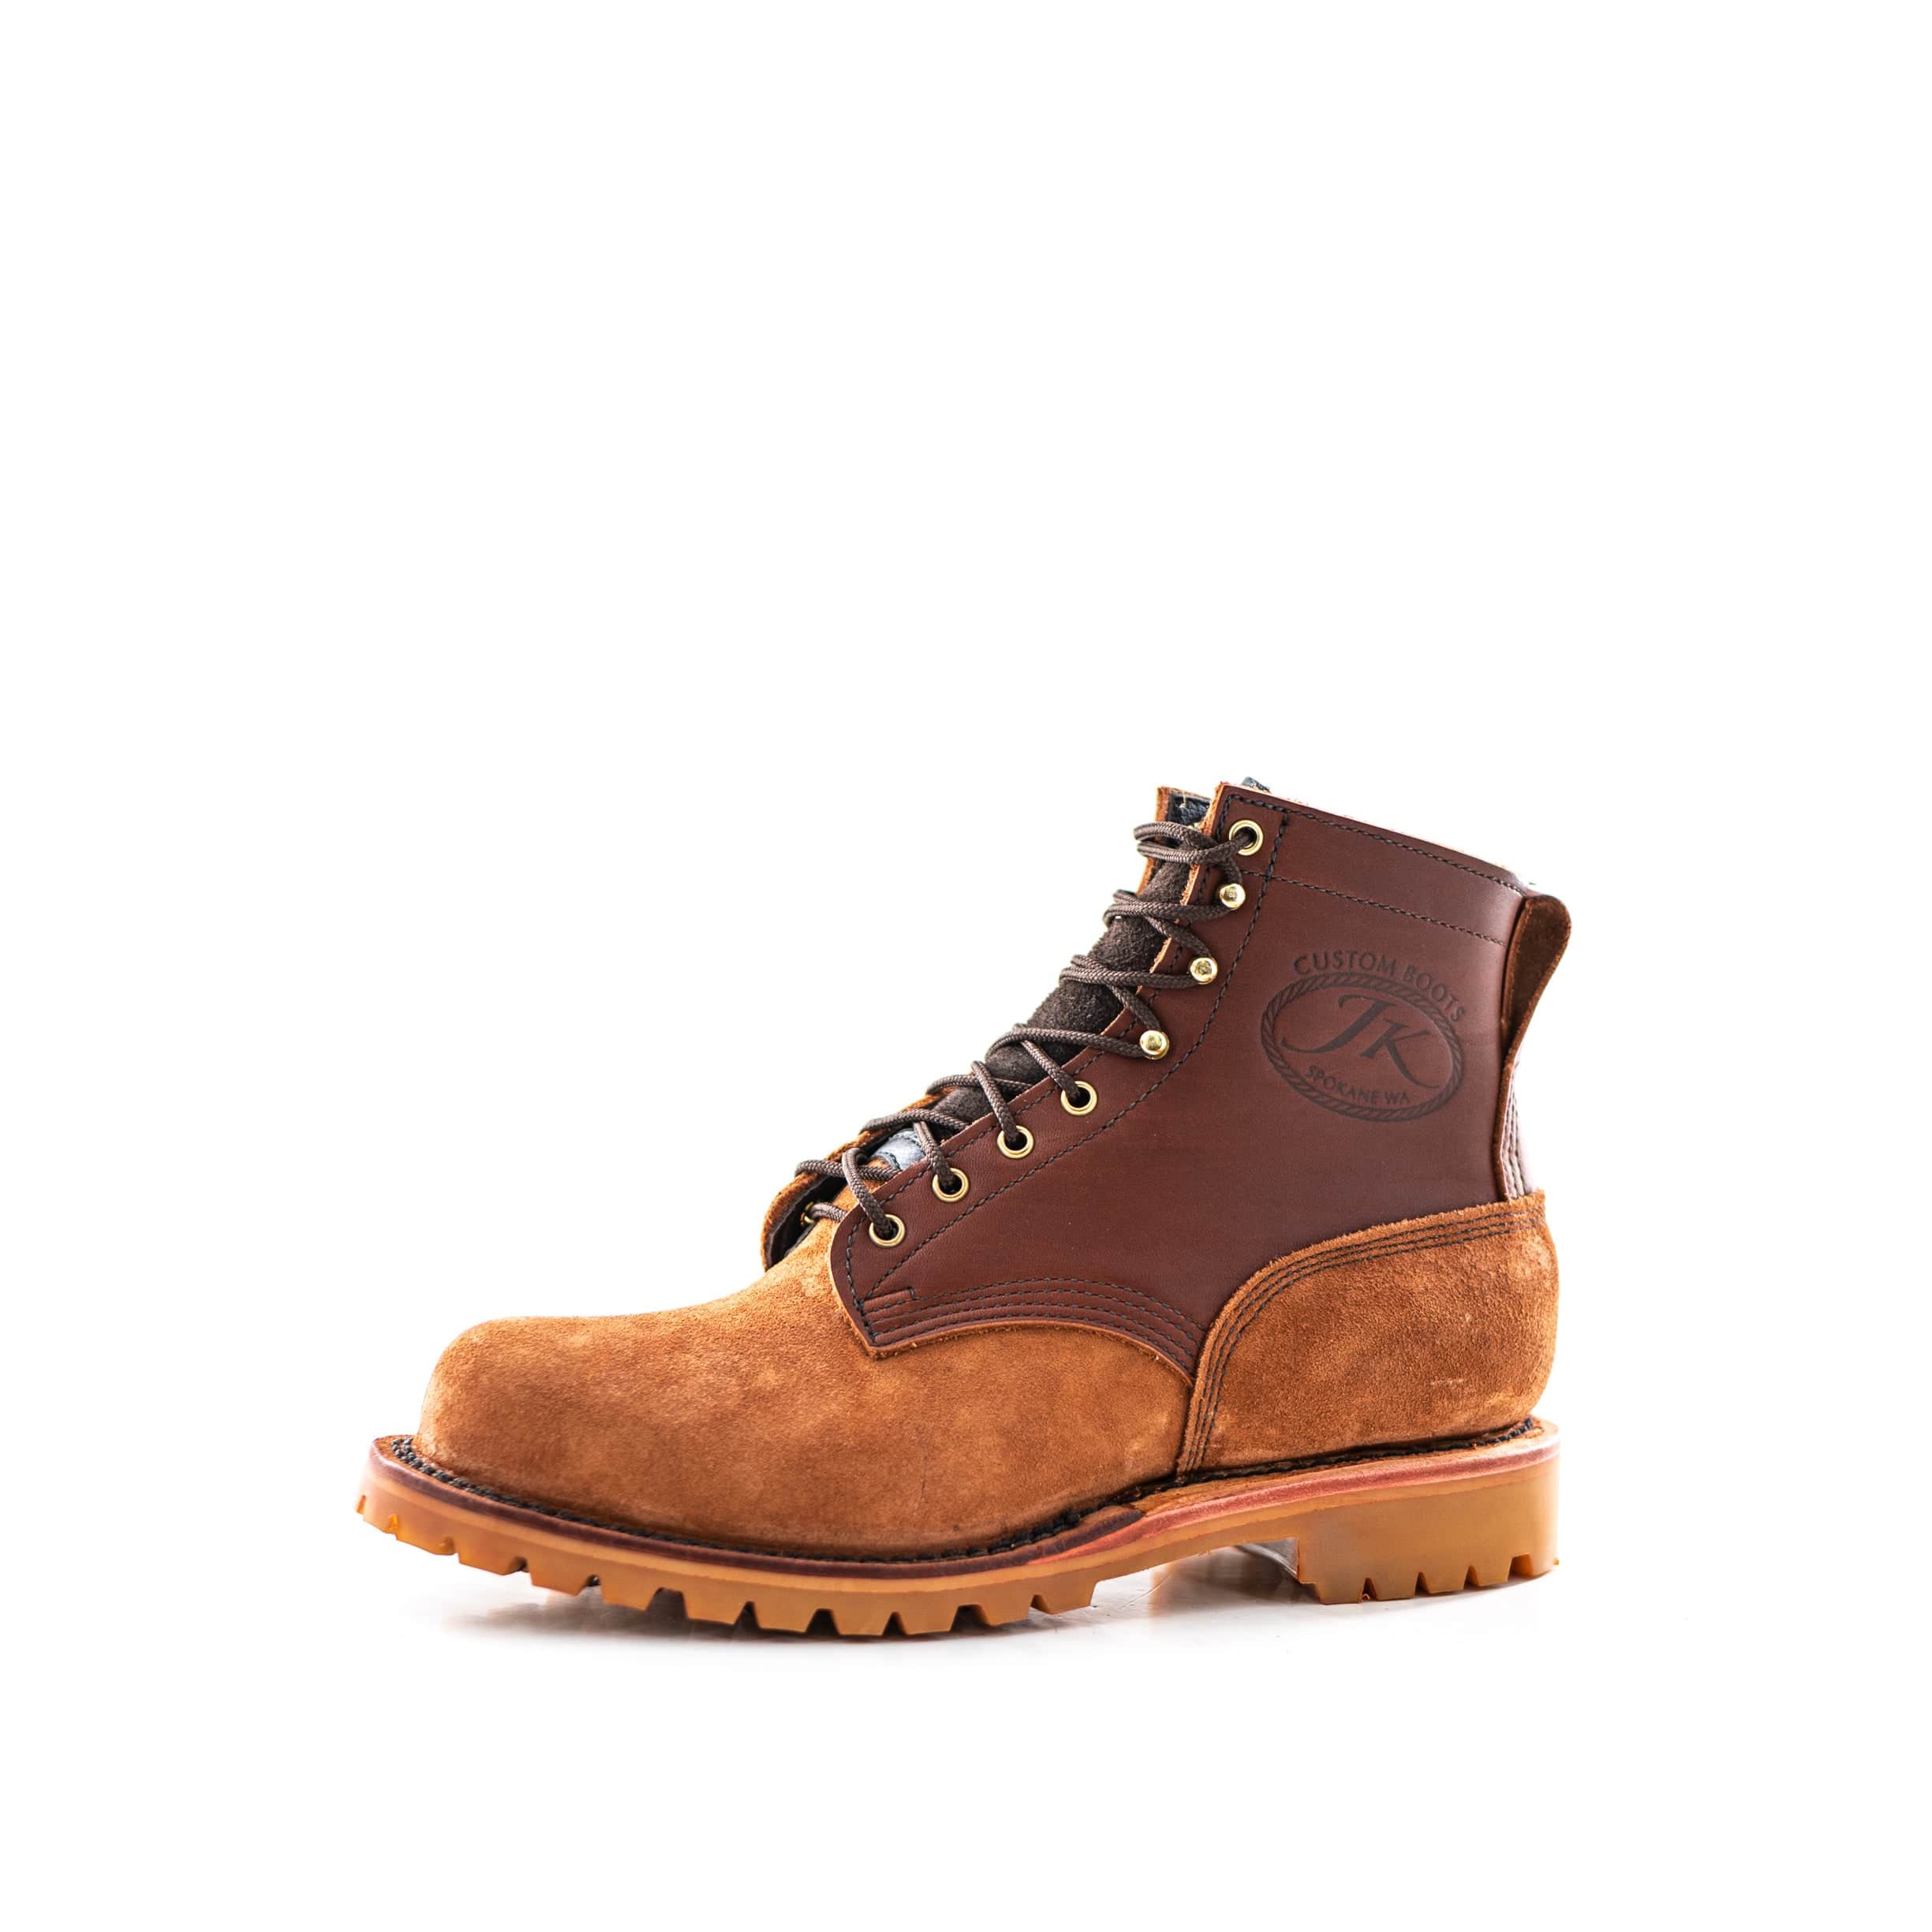 Kreet de jouwe liefdadigheid O.T. 6" (Safety Toe) - Redwood – JK Boots